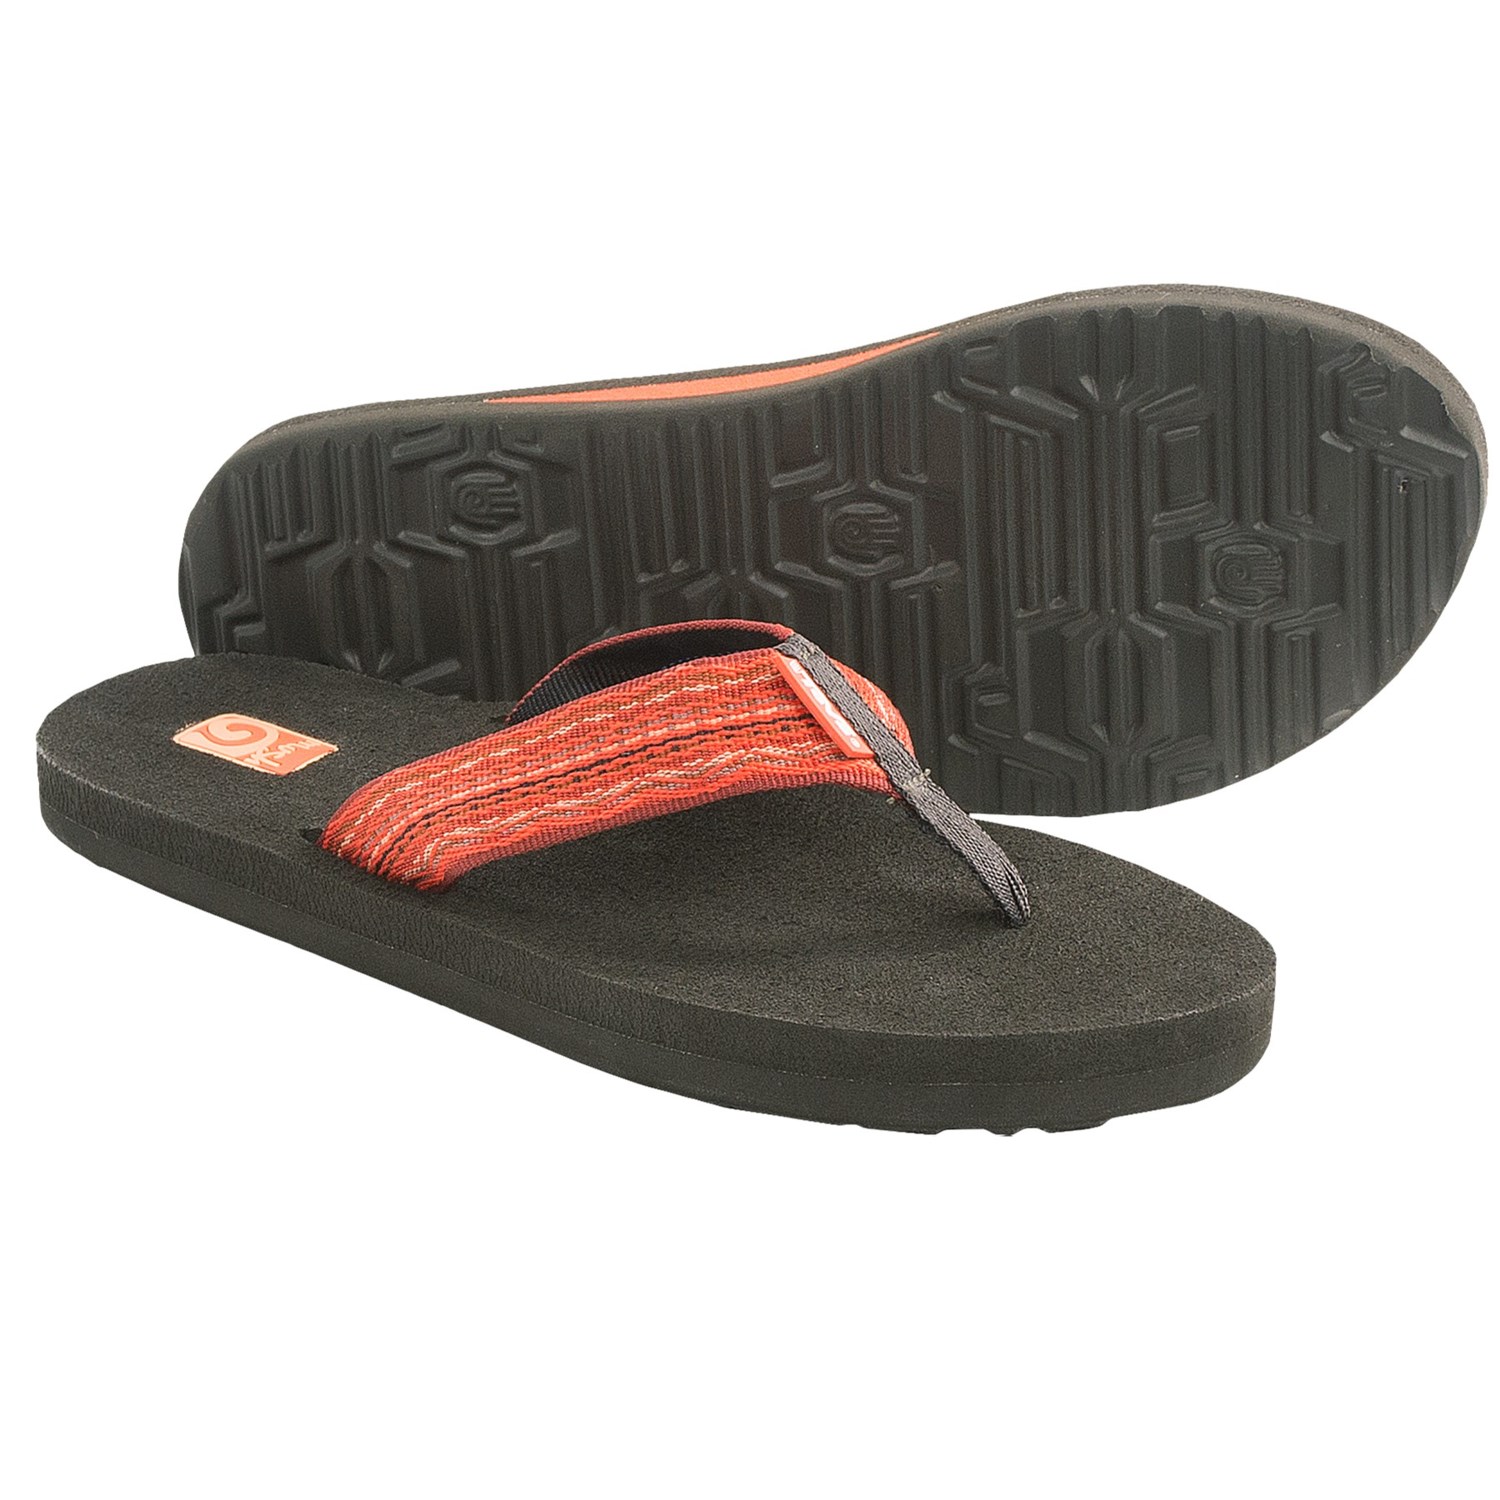 Teva Mush II Thong Sandals - Flip-Flops (For Women) in Santori Tribal ...